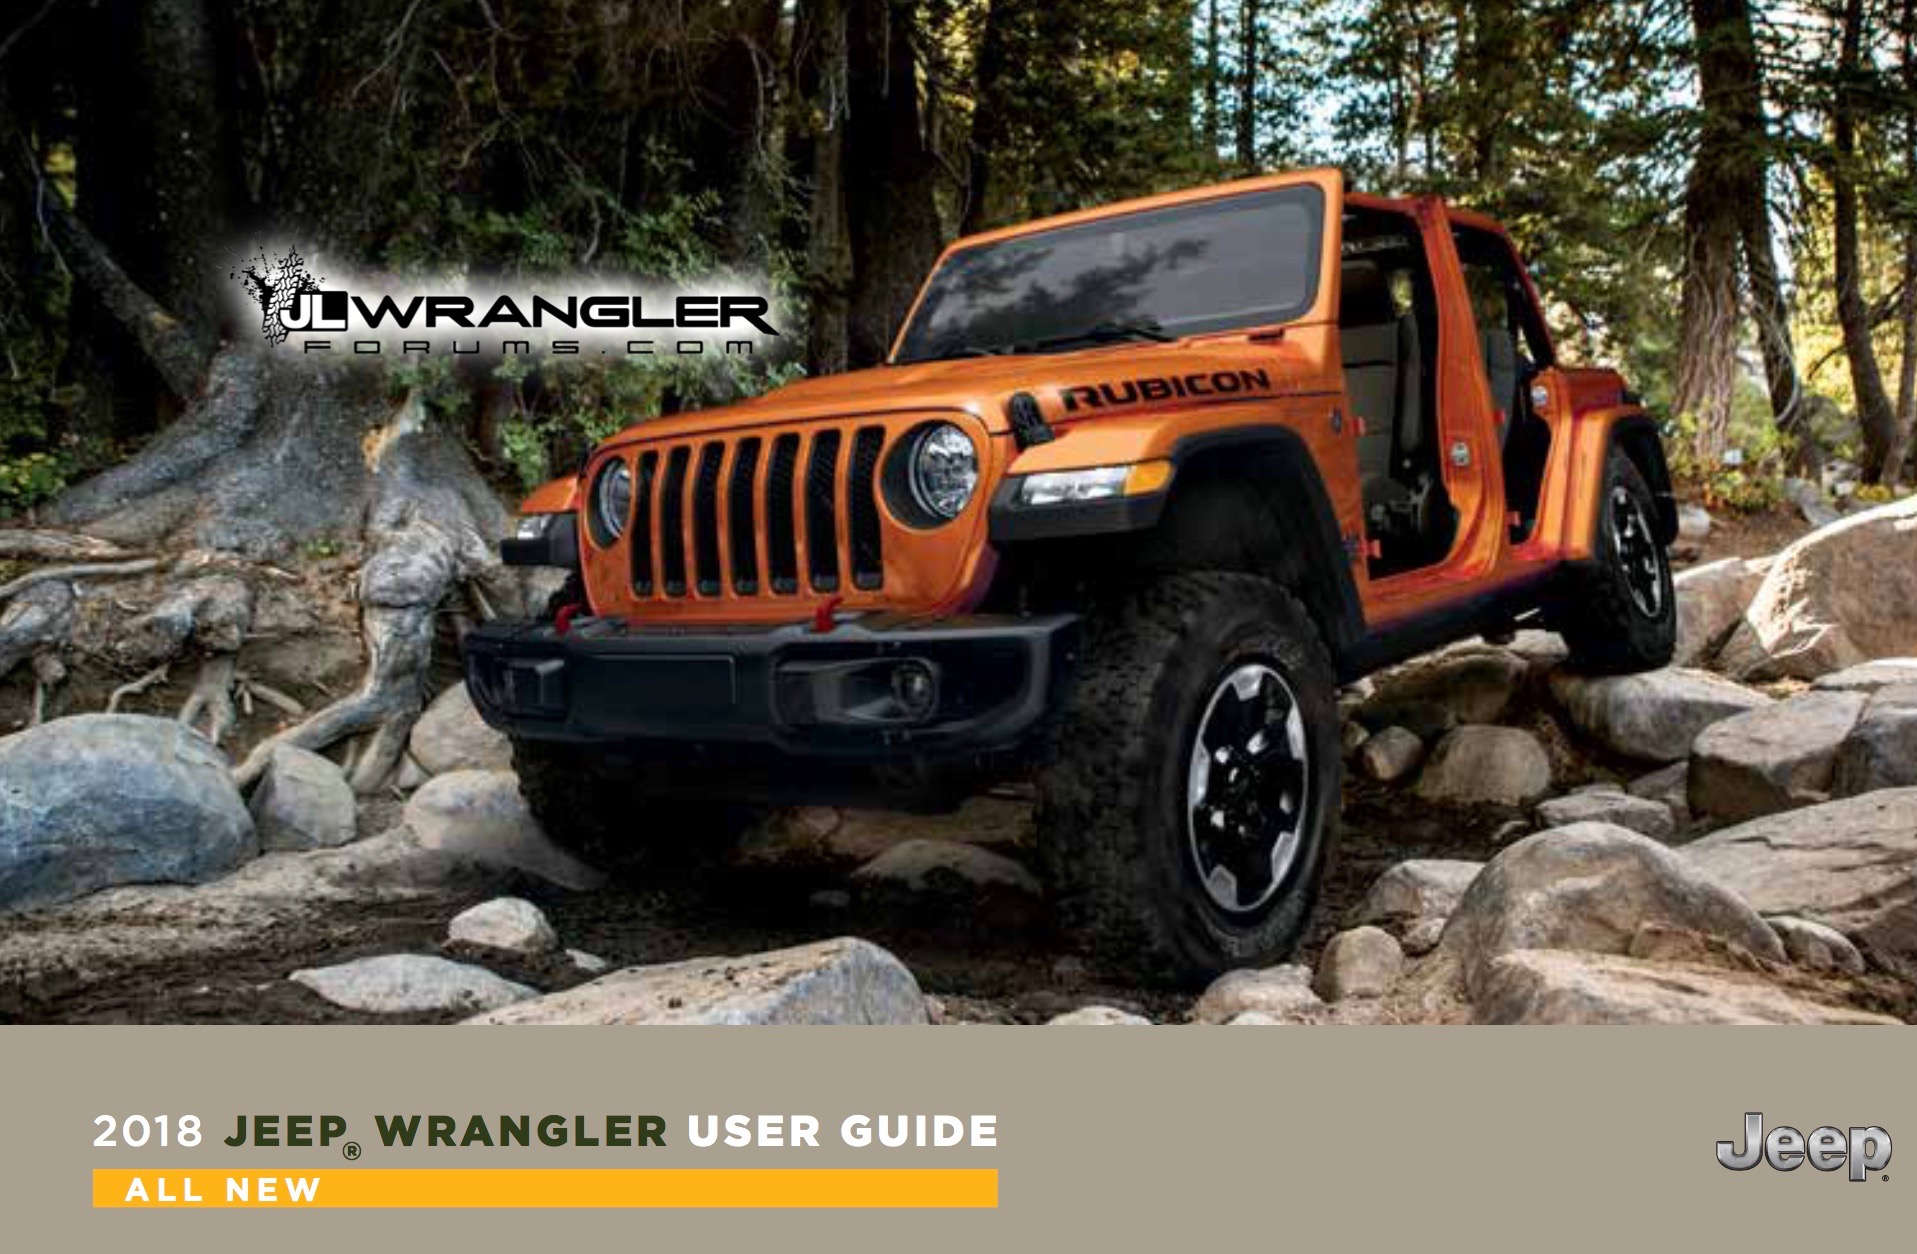 2018 Jeep Wrangler user guide leaked, 2.0L engine confirmed